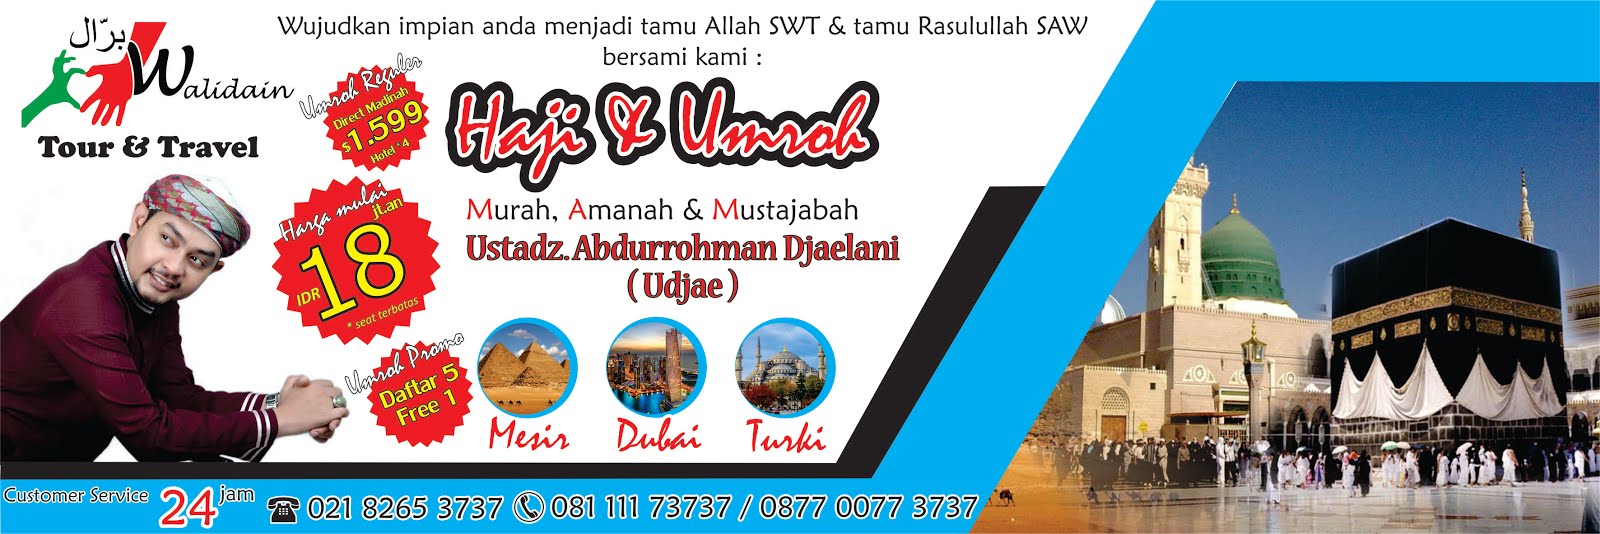 WALIDAIN TOUR TRAVEL PAKET UMROH MURAH DAN HEMAT 2017 - 2018 DI BEKASI DAN JAKARTA